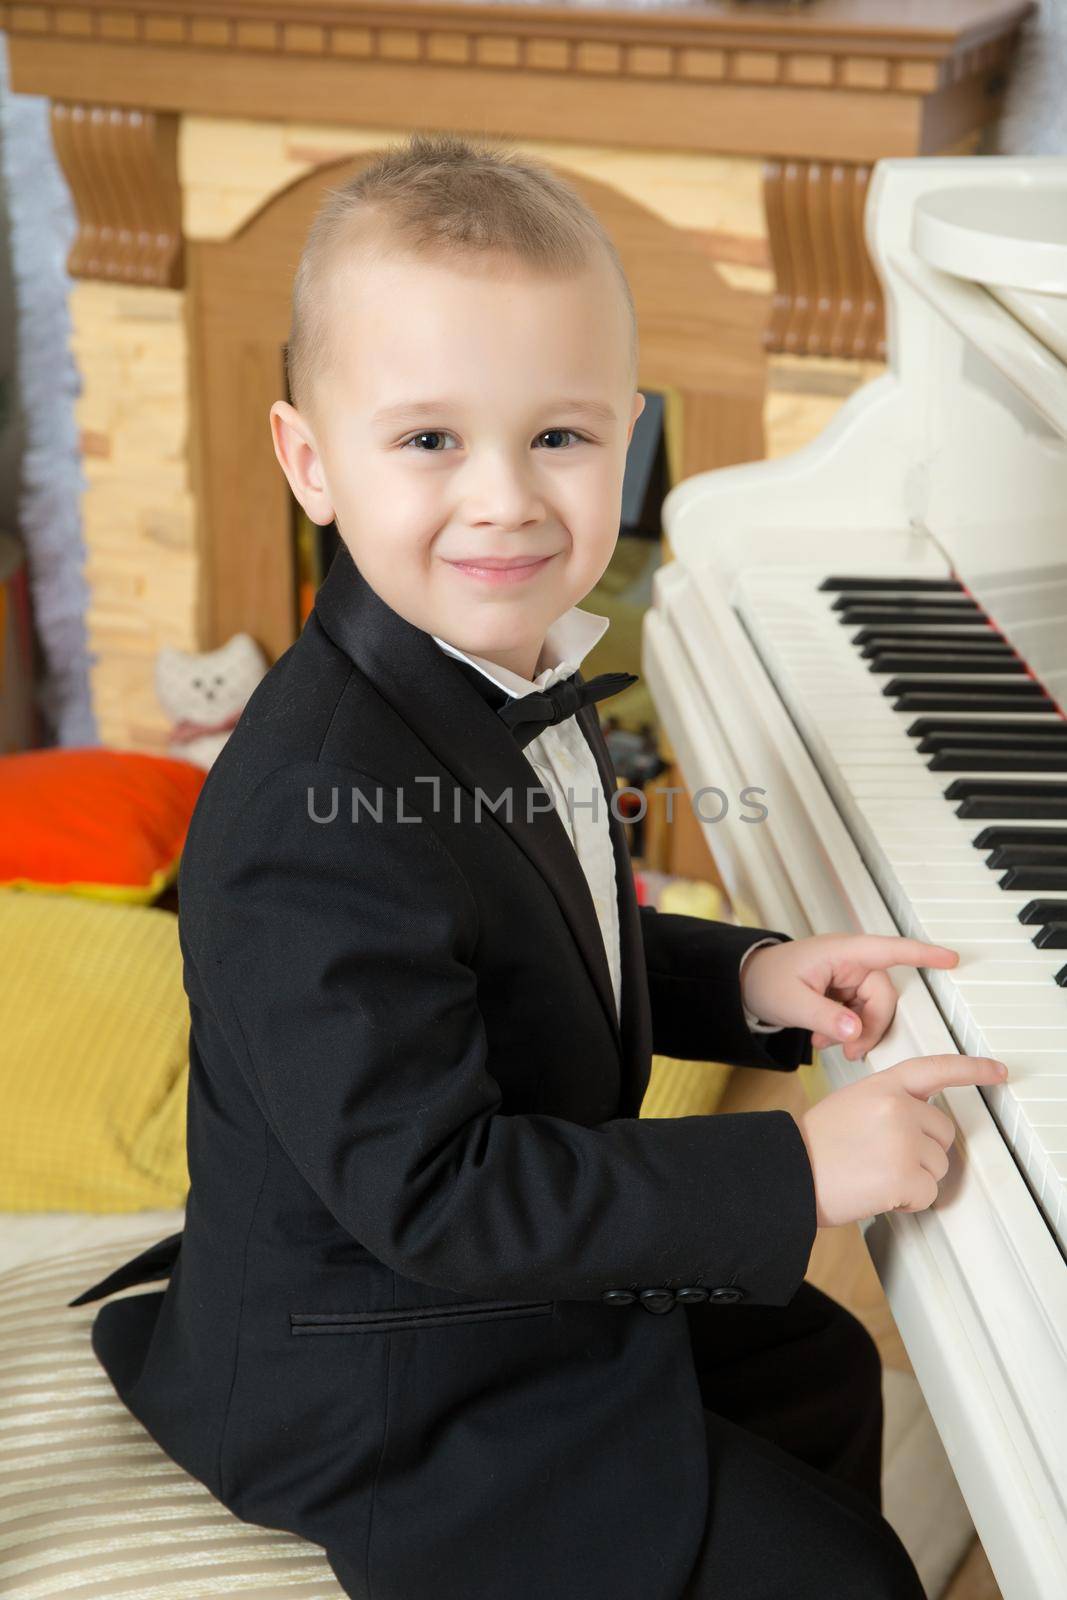 The boy sits at a white piano. by kolesnikov_studio